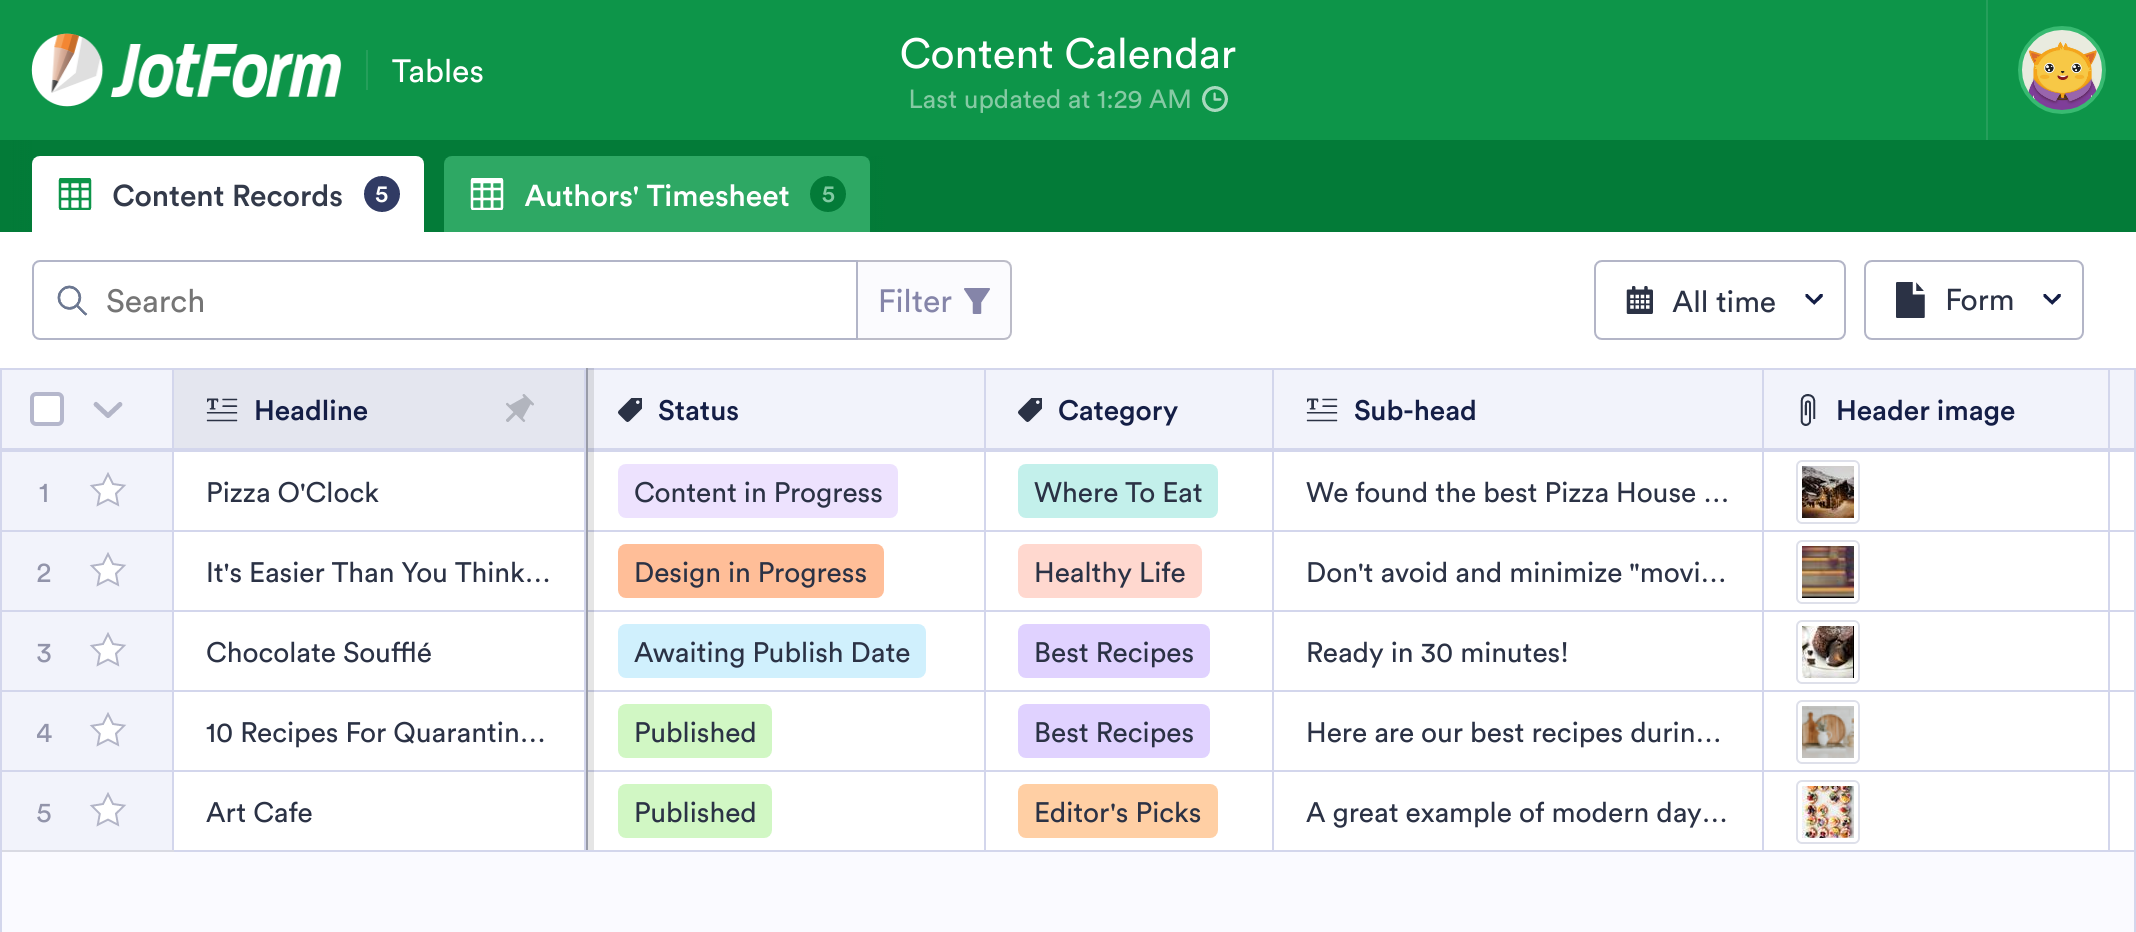 Content Calendar Template | JotForm Tables